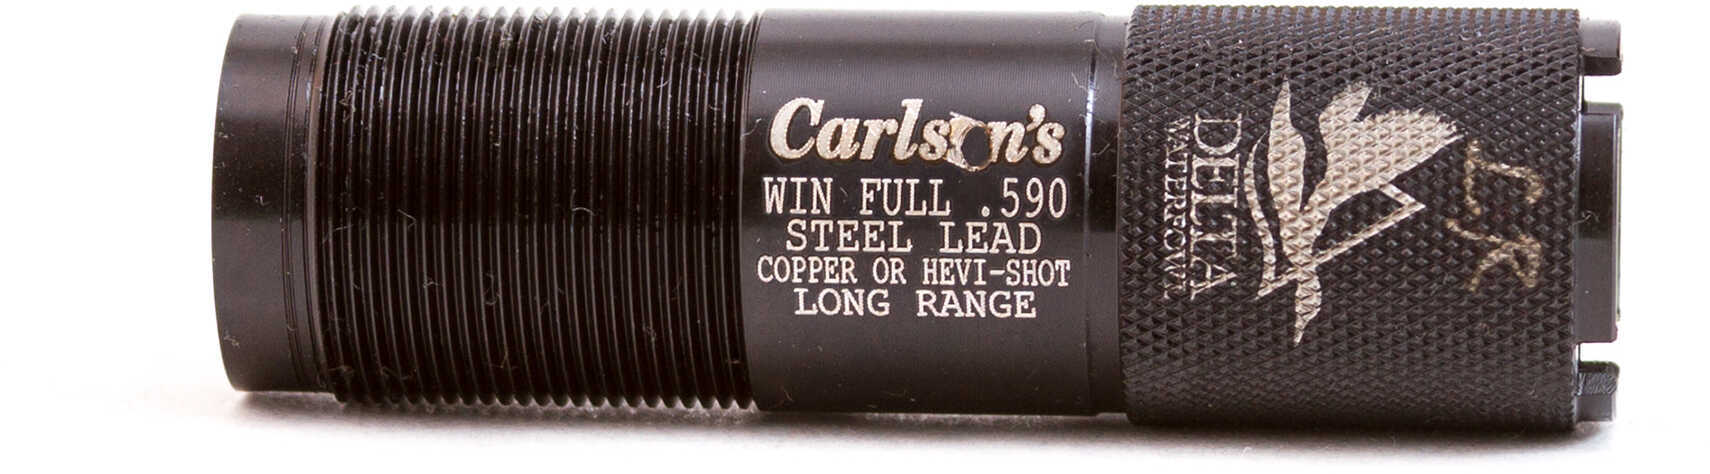 Carlsons 07456 Delta Waterfowl WinChoke 20 Gauge Long Range 17-4 Stainless Steel Black